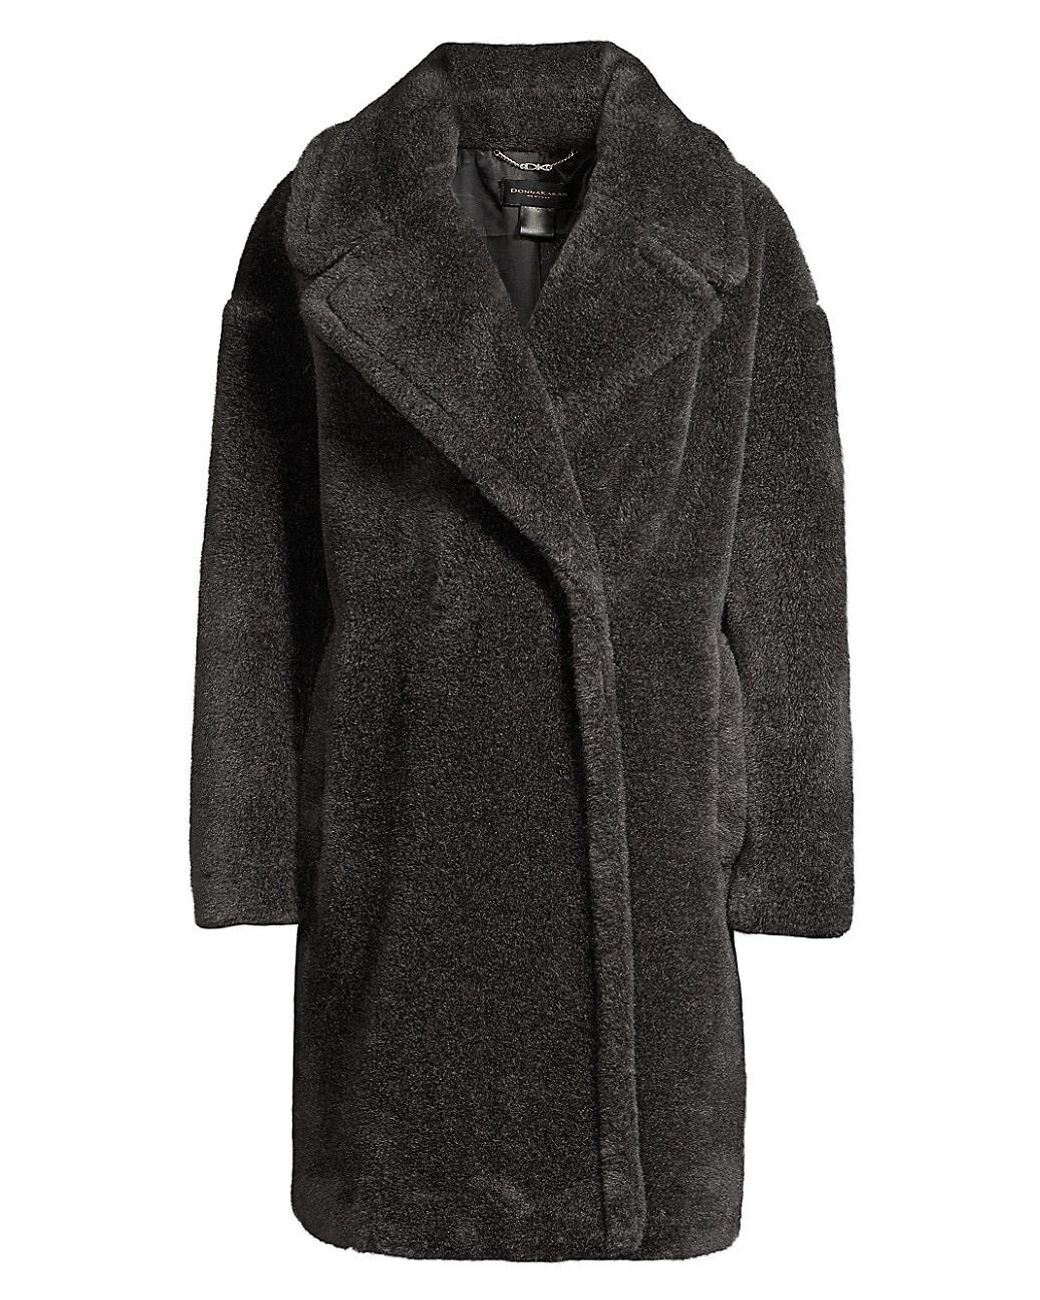 Donna Karan Faux Fur Teddy Coat in Gray | Lyst